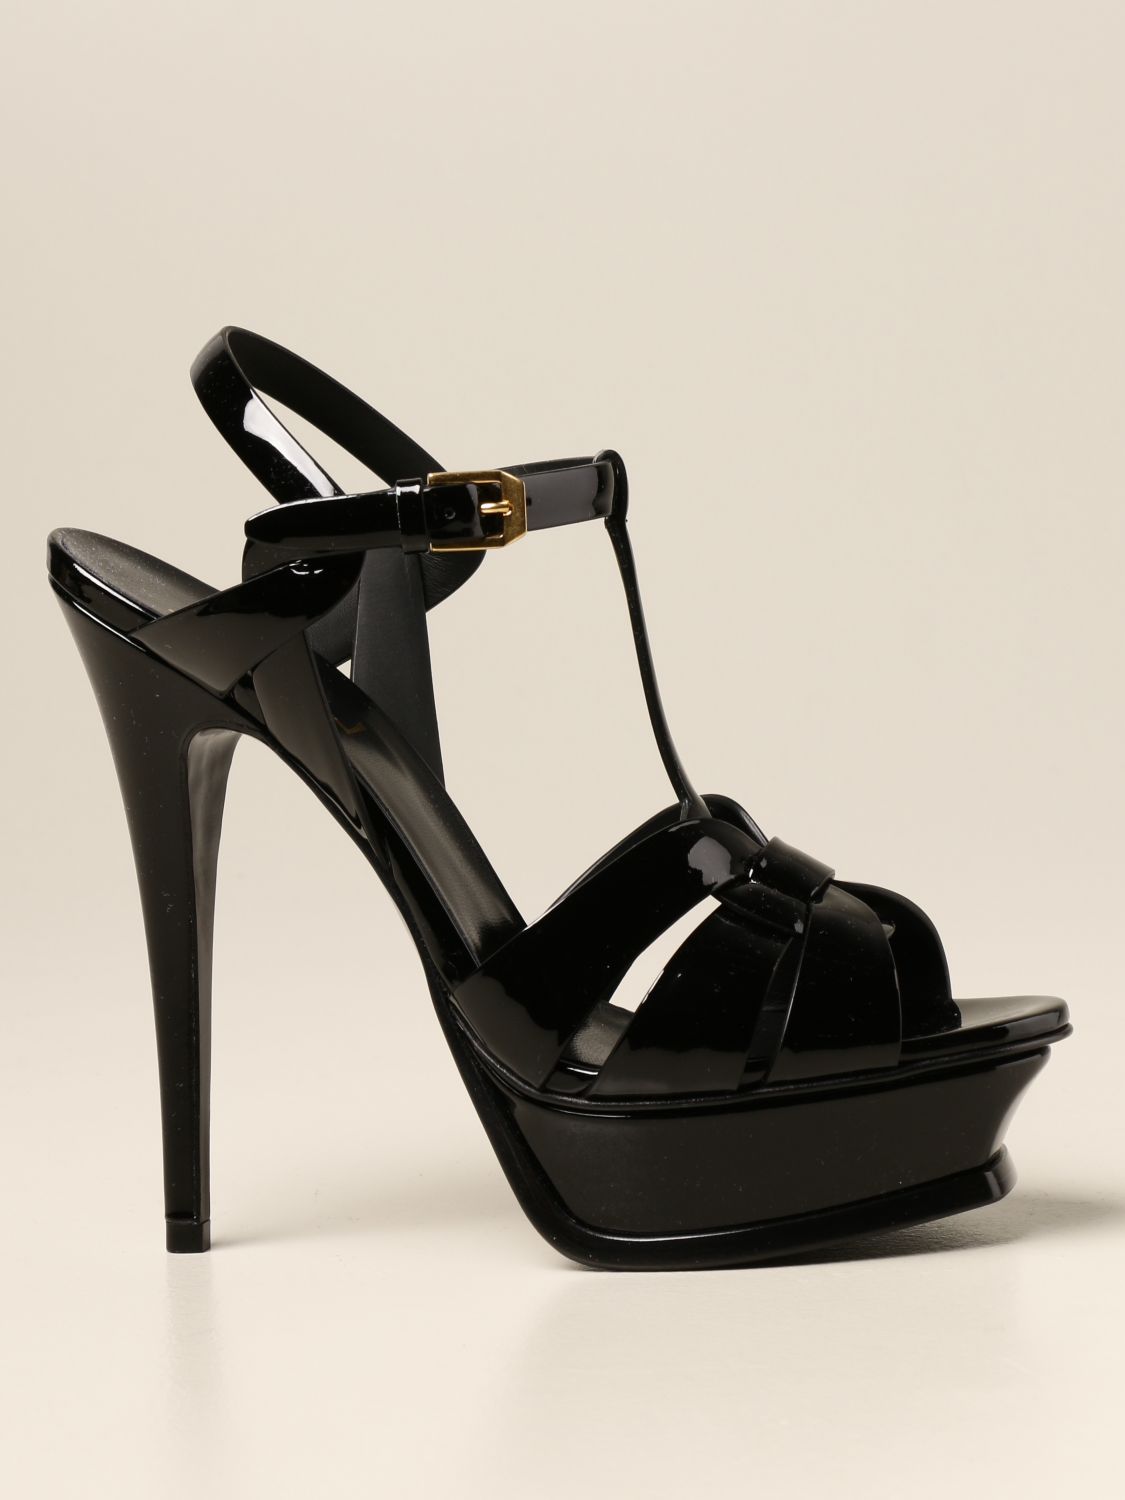 Buy > ysl black heel > in stock